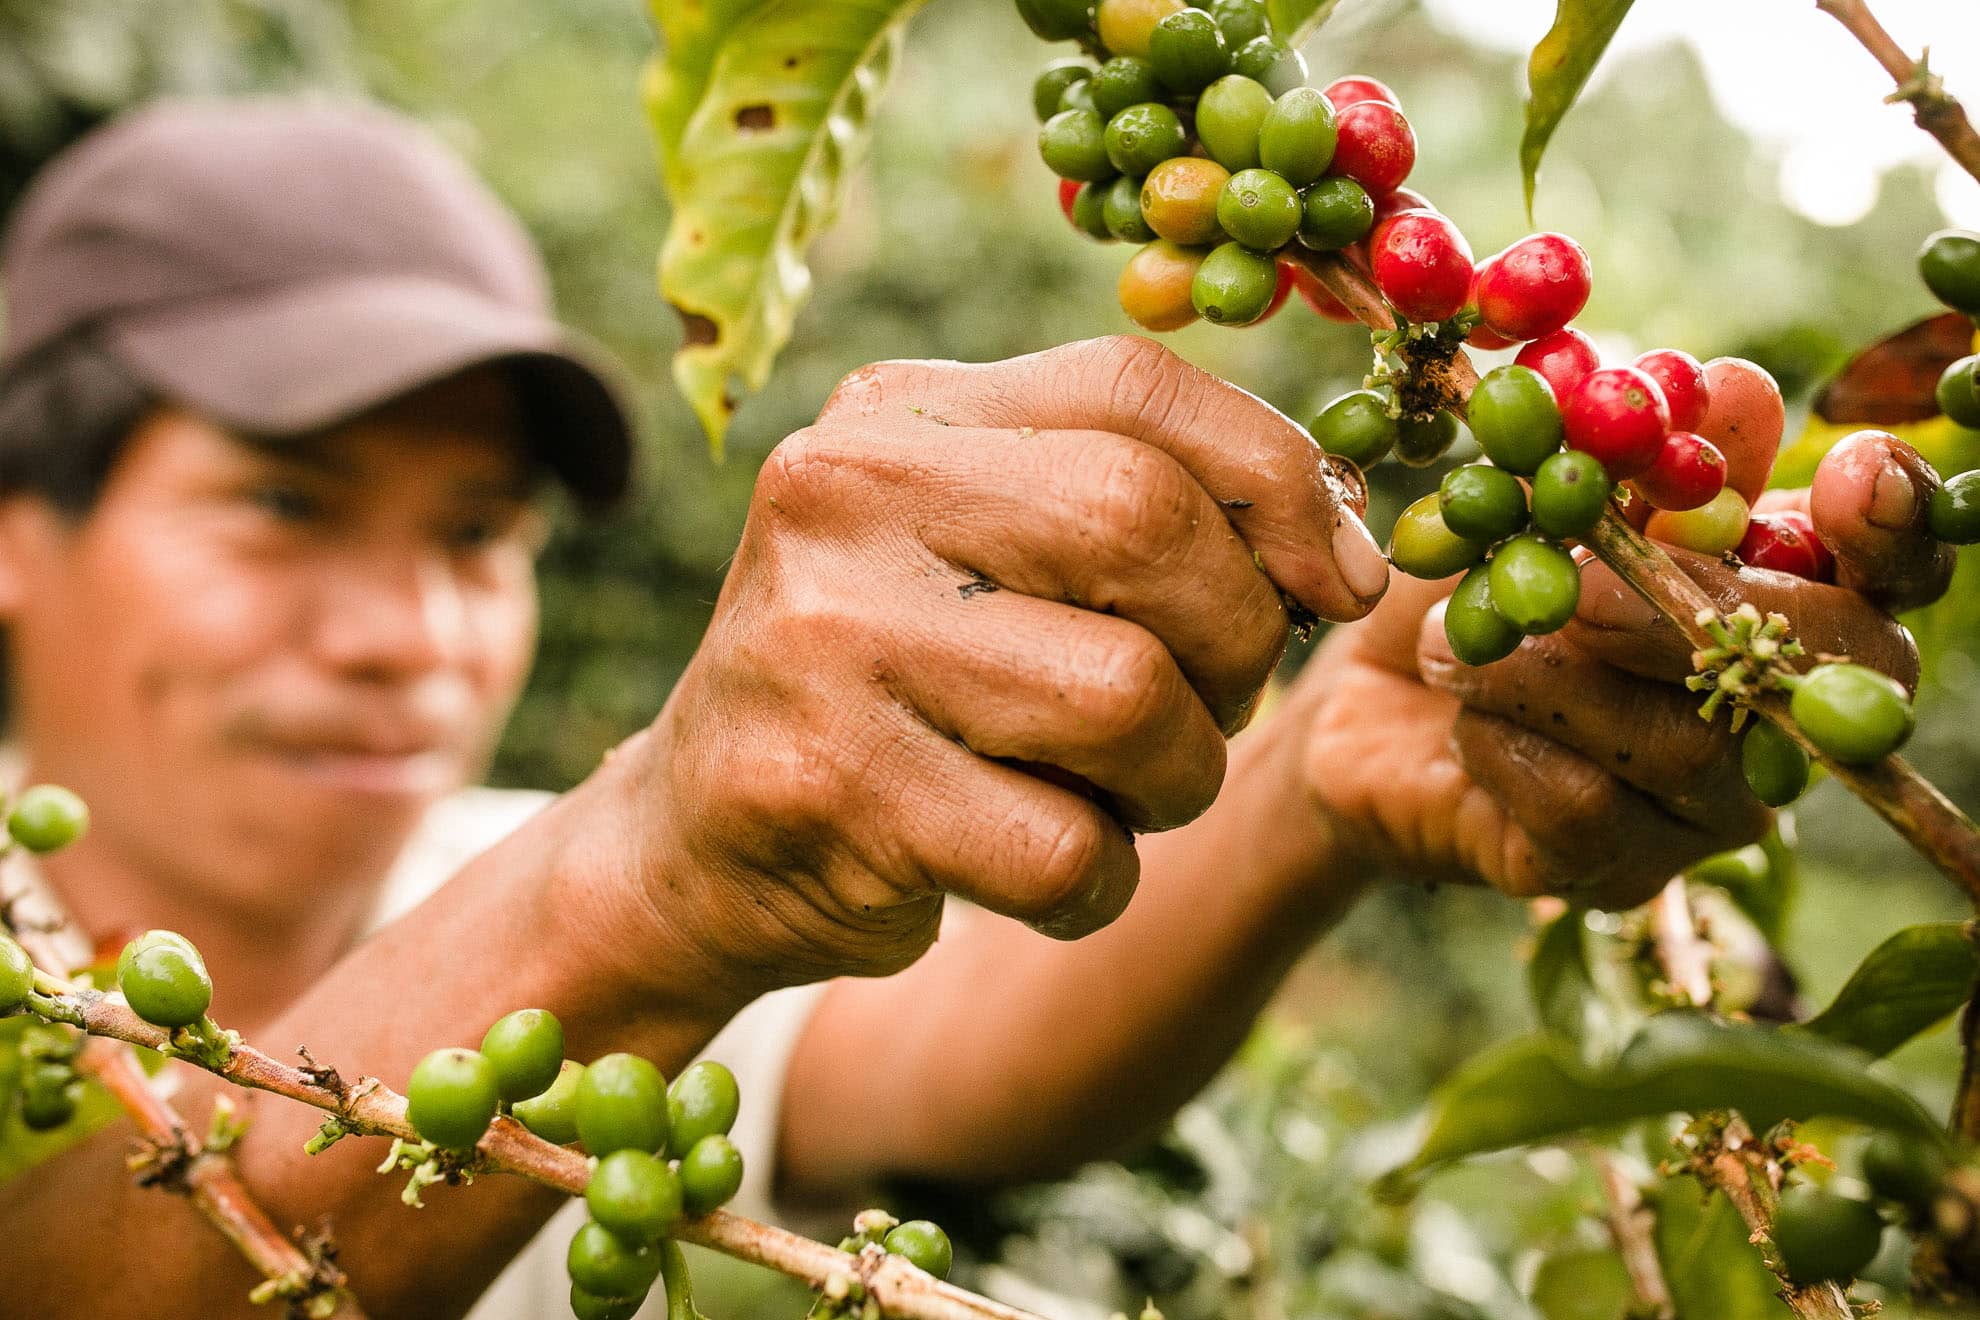 Picking coffee in Costa Rica